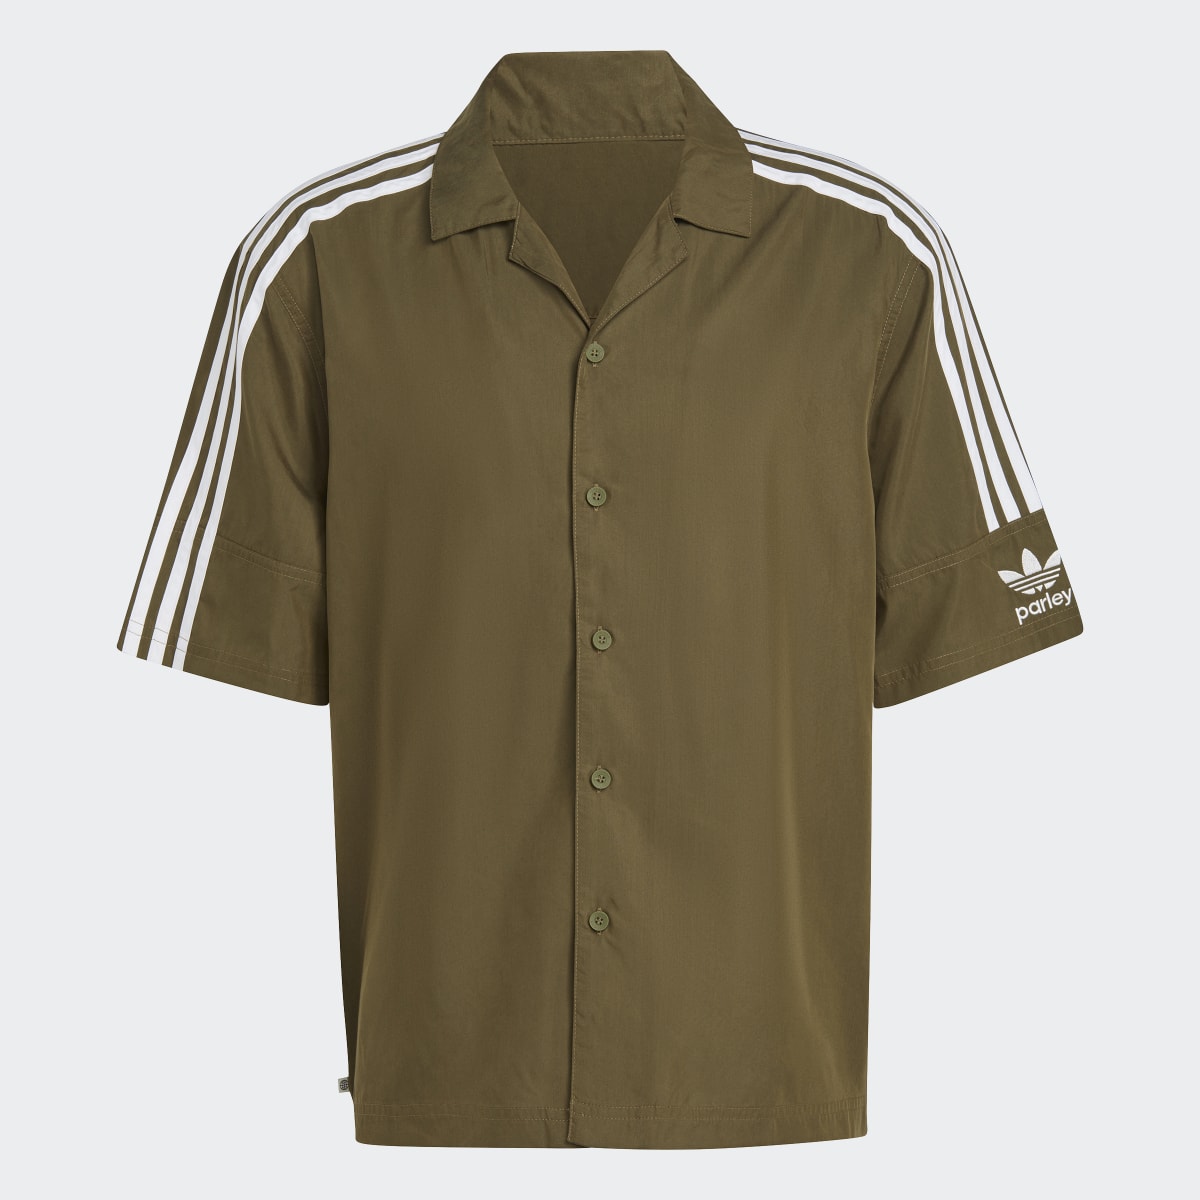 Adidas Adicolor Parley Shirt. 5